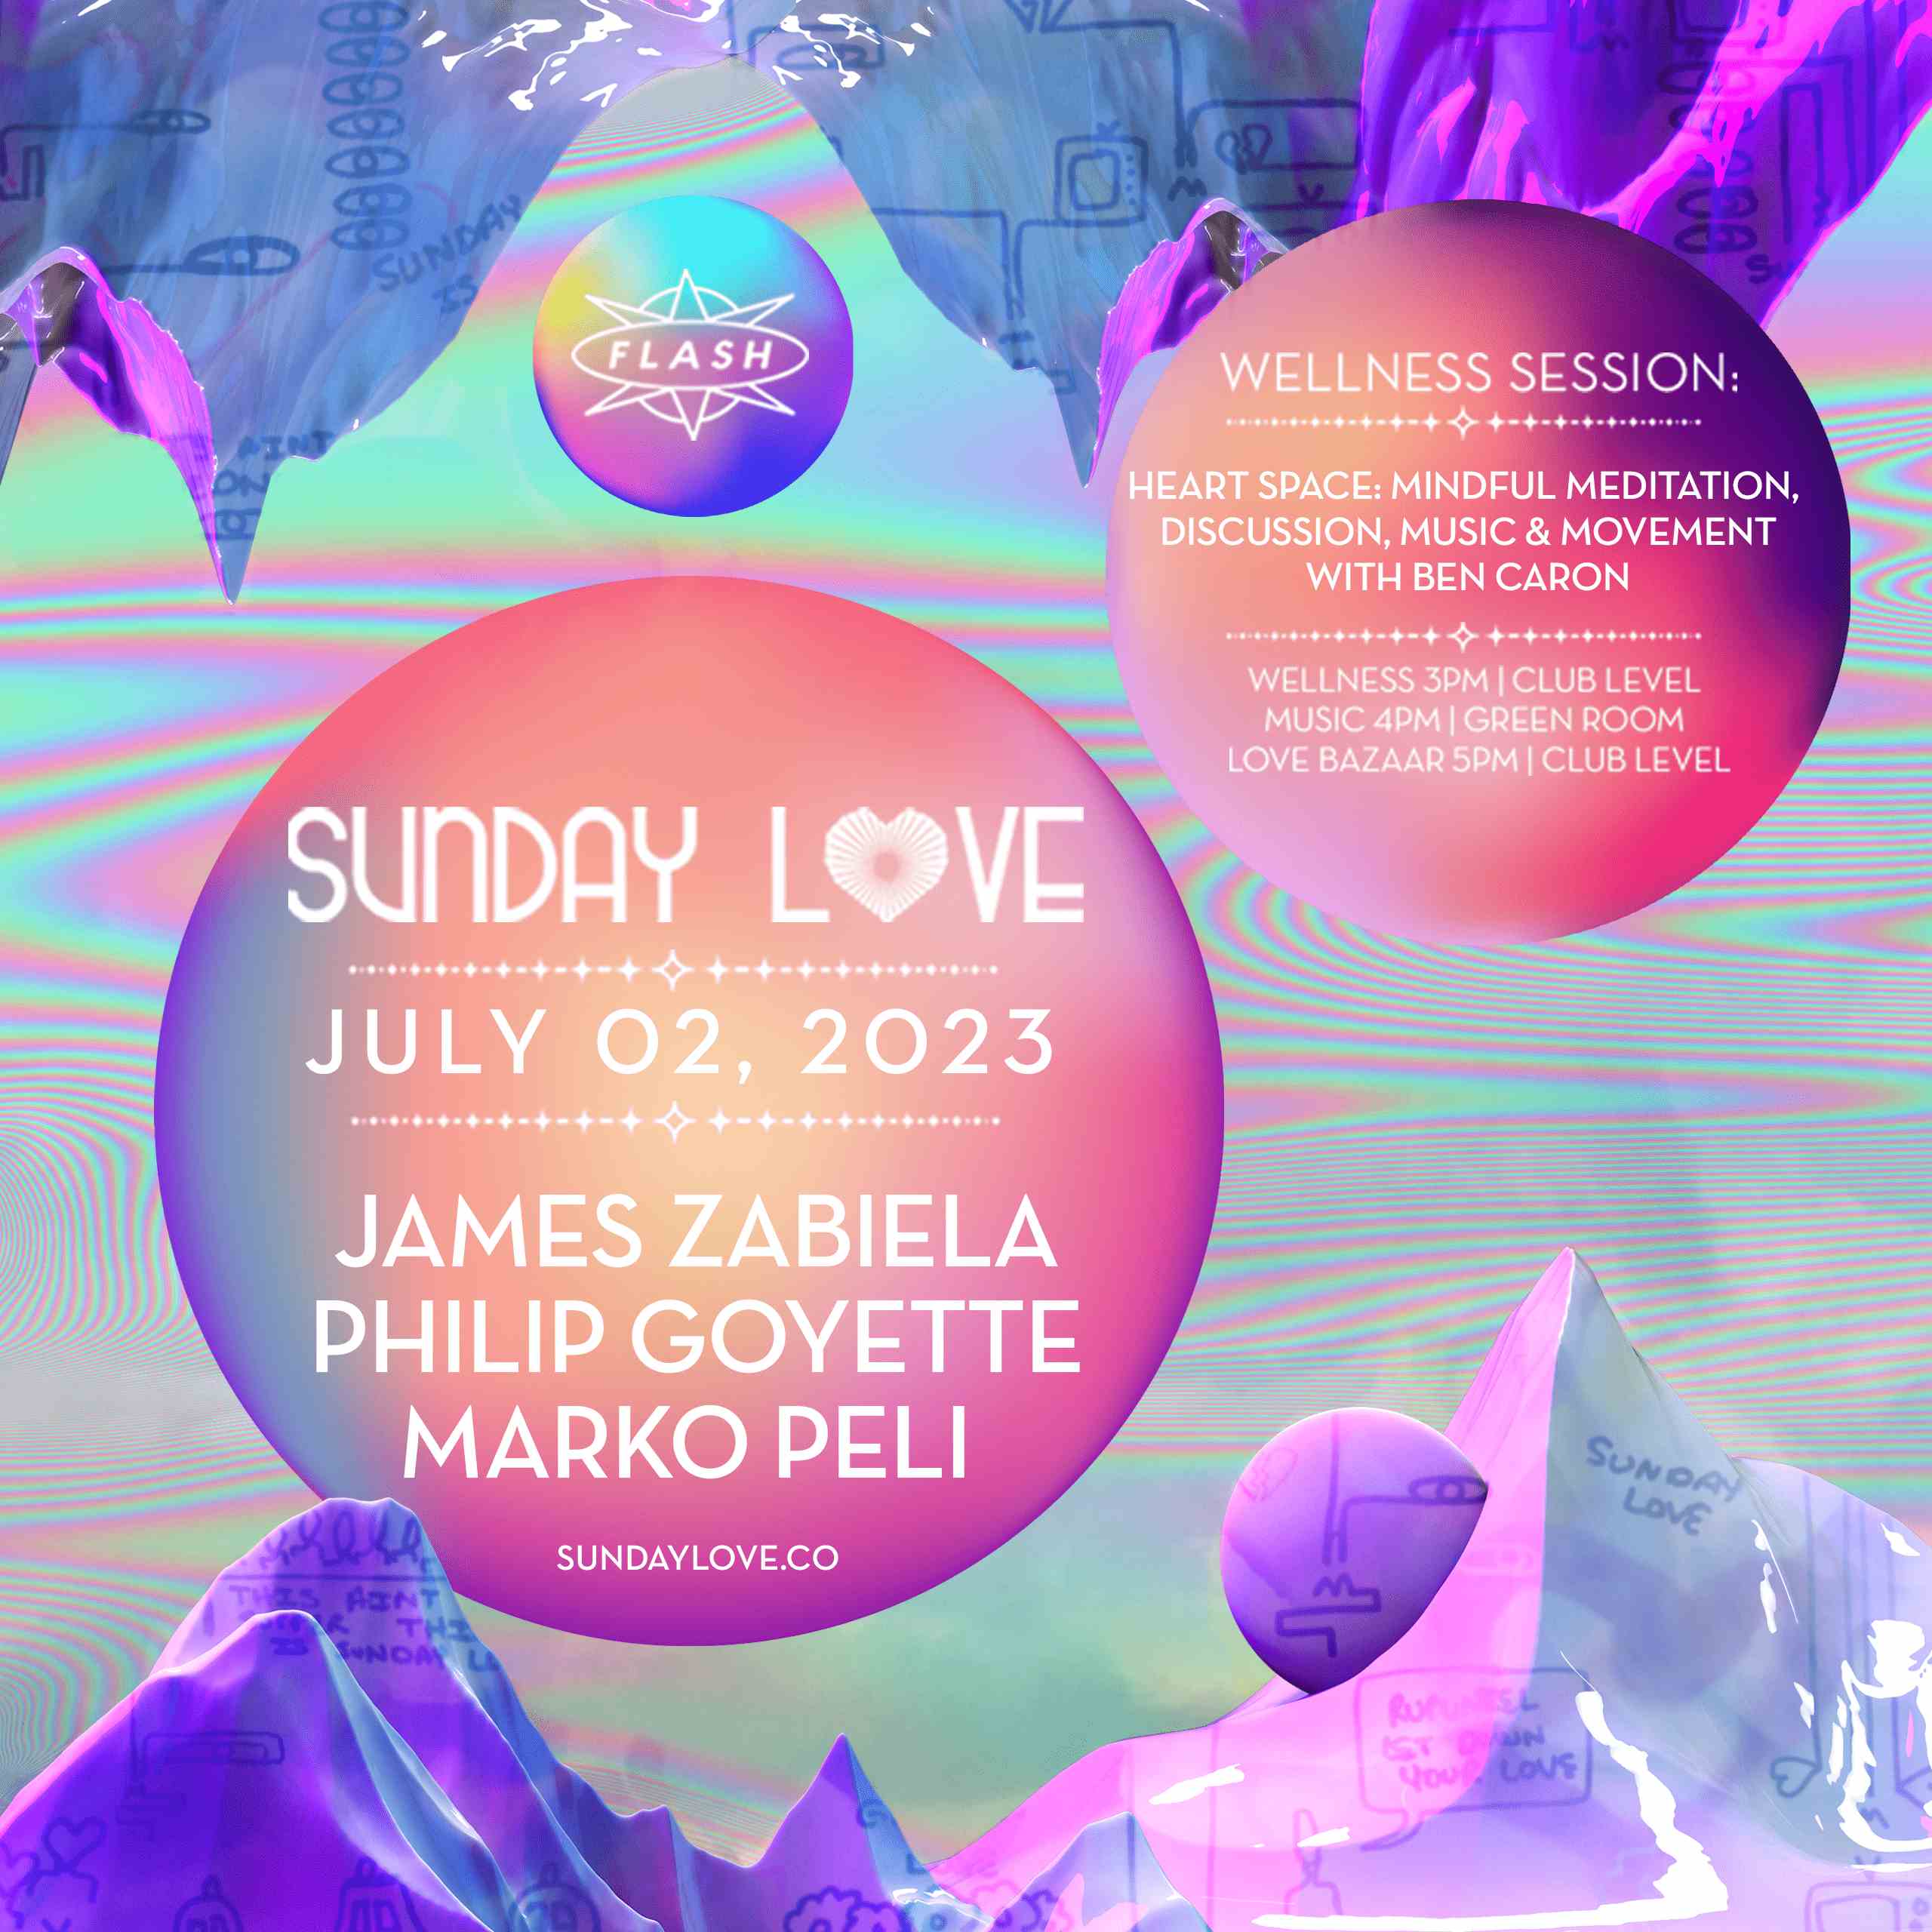 Sunday Love: James Zabiela - Philip Goyette - Marko Peli event flyer